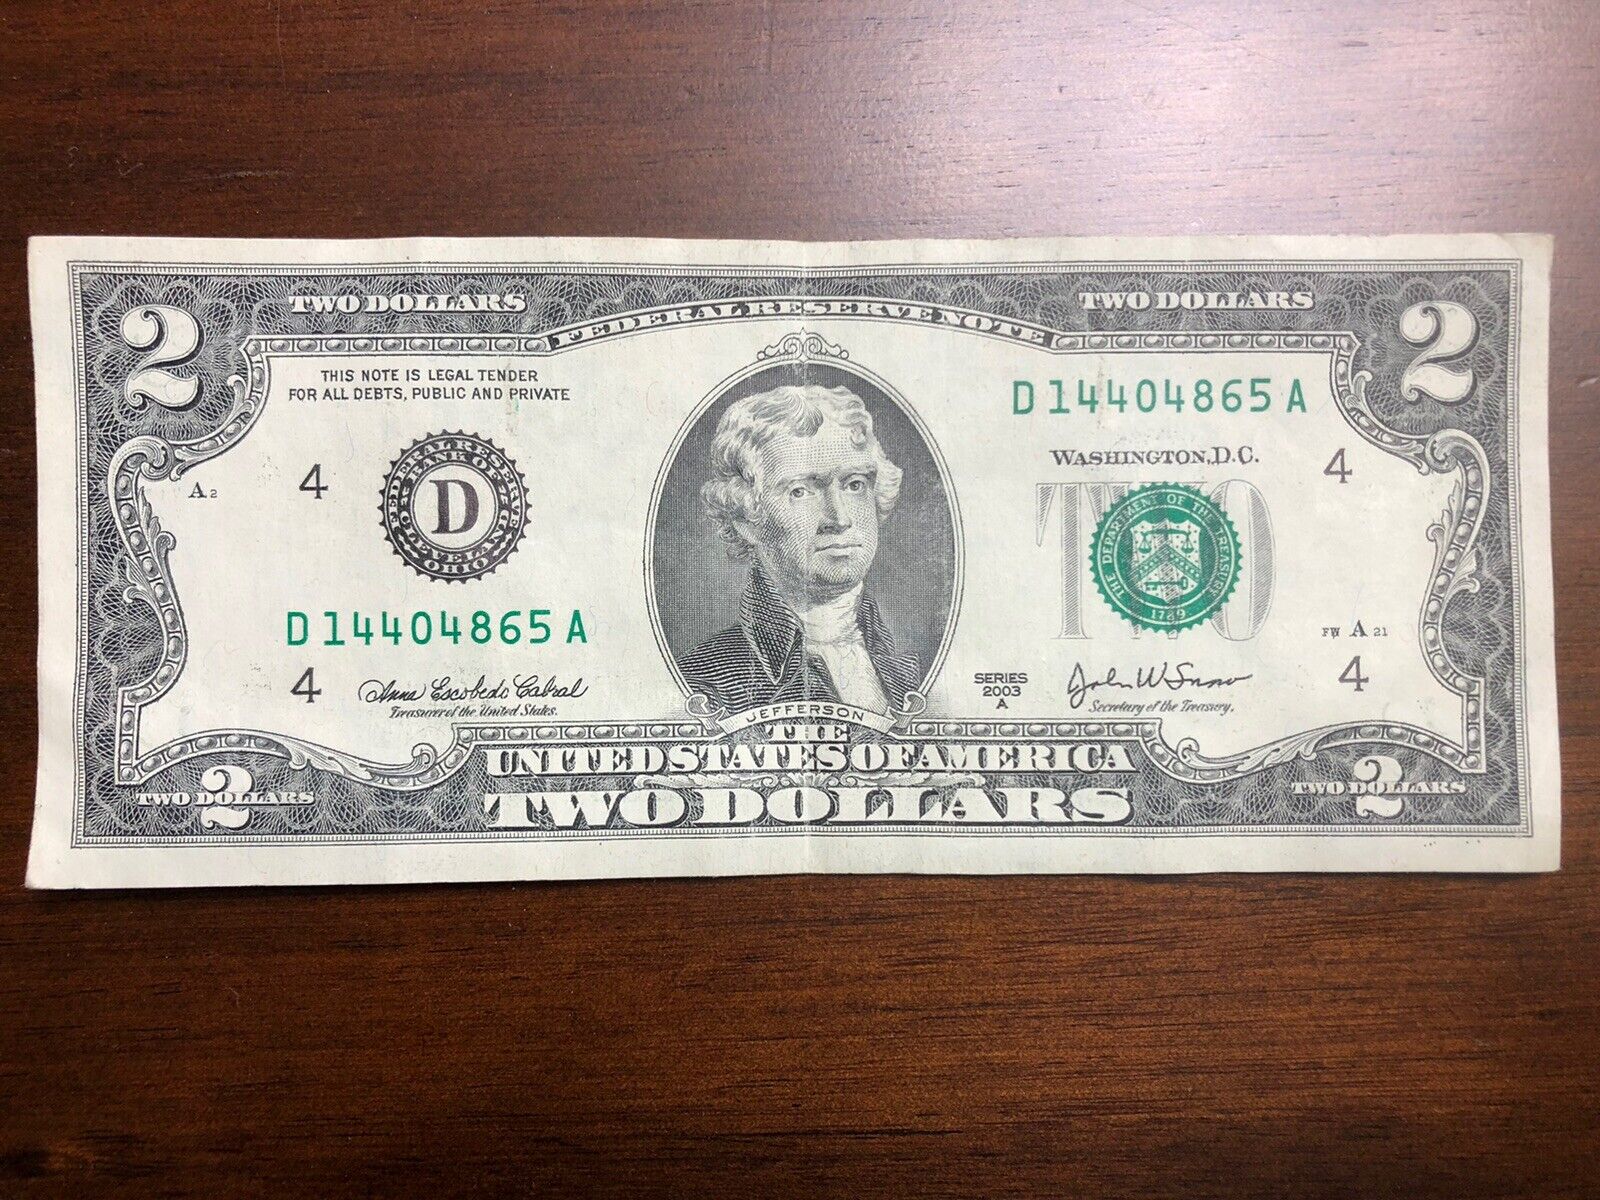 2003 - $2 Two Dollar Bill Rare Series A